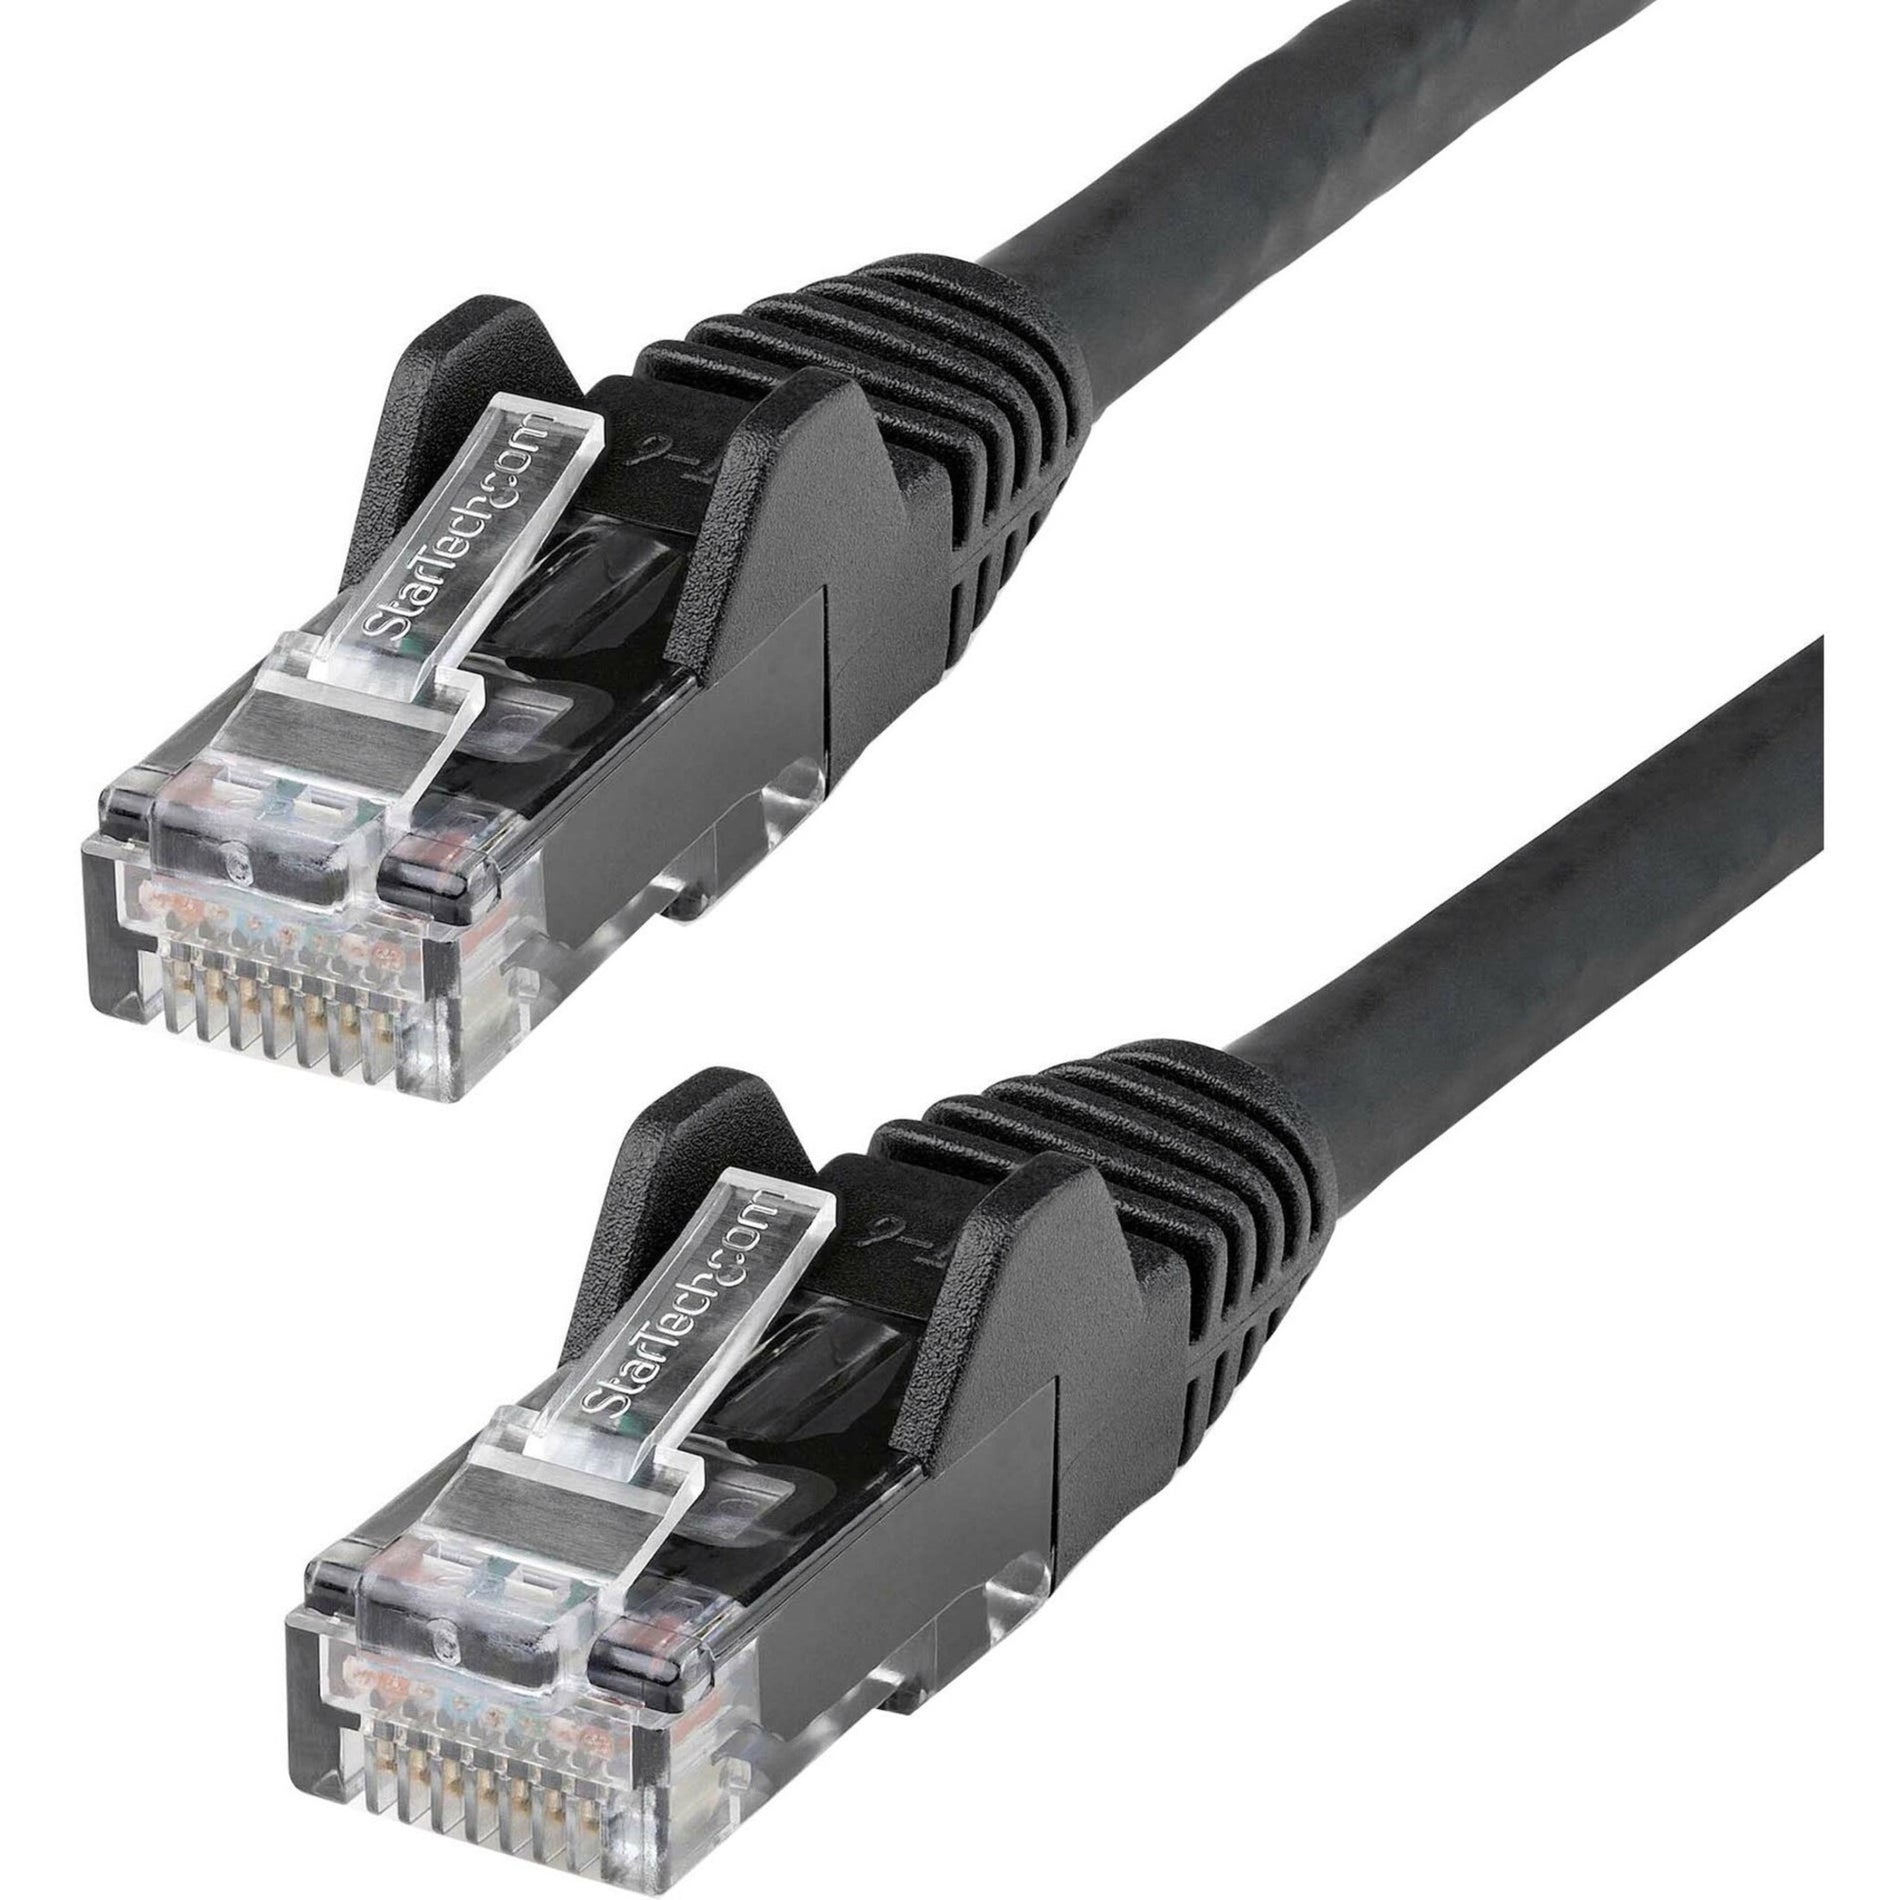 StarTech.com N6PATCH30BK Cat6 Patch Cable, 30ft Black Ethernet Cable with Snagless RJ45 Connectors